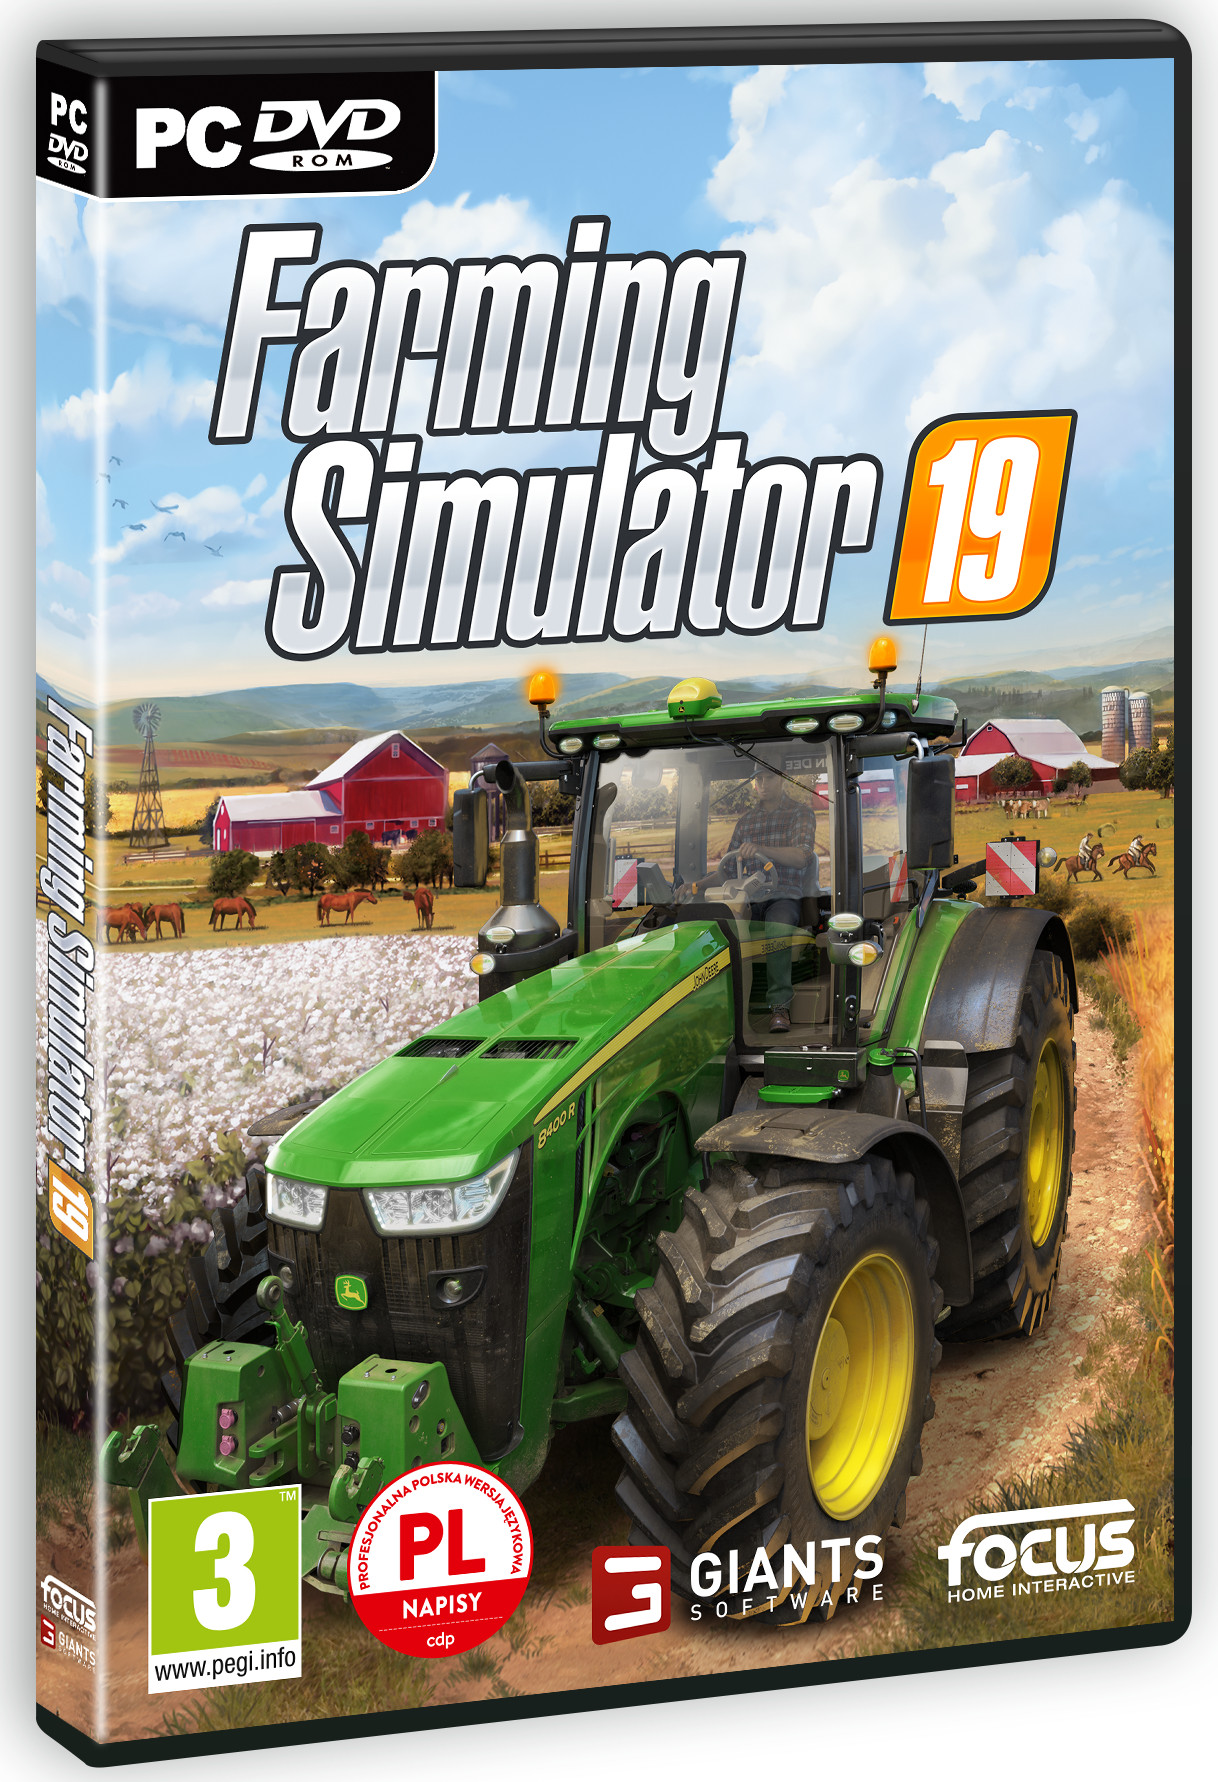 Opinie o Farming Simulator 19 PC